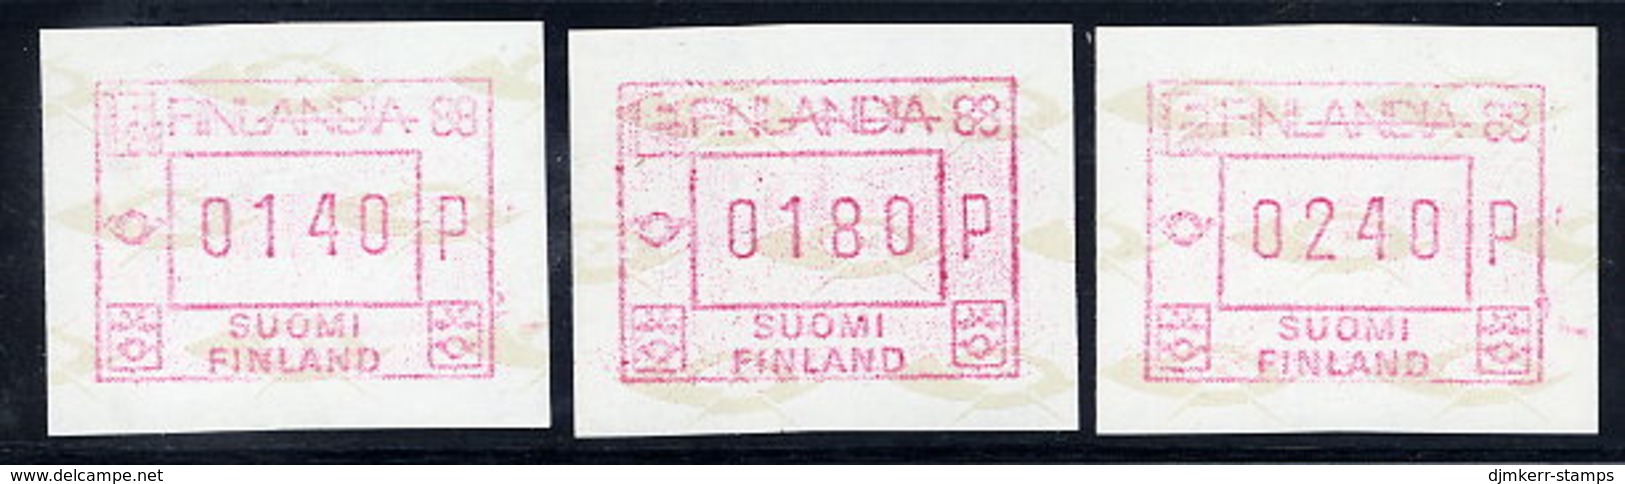 FINLAND 1988 FINLANDIA '88  Issue 3 Different Values MNH / ** .  Michel 4 - Viñetas De Franqueo [ATM]